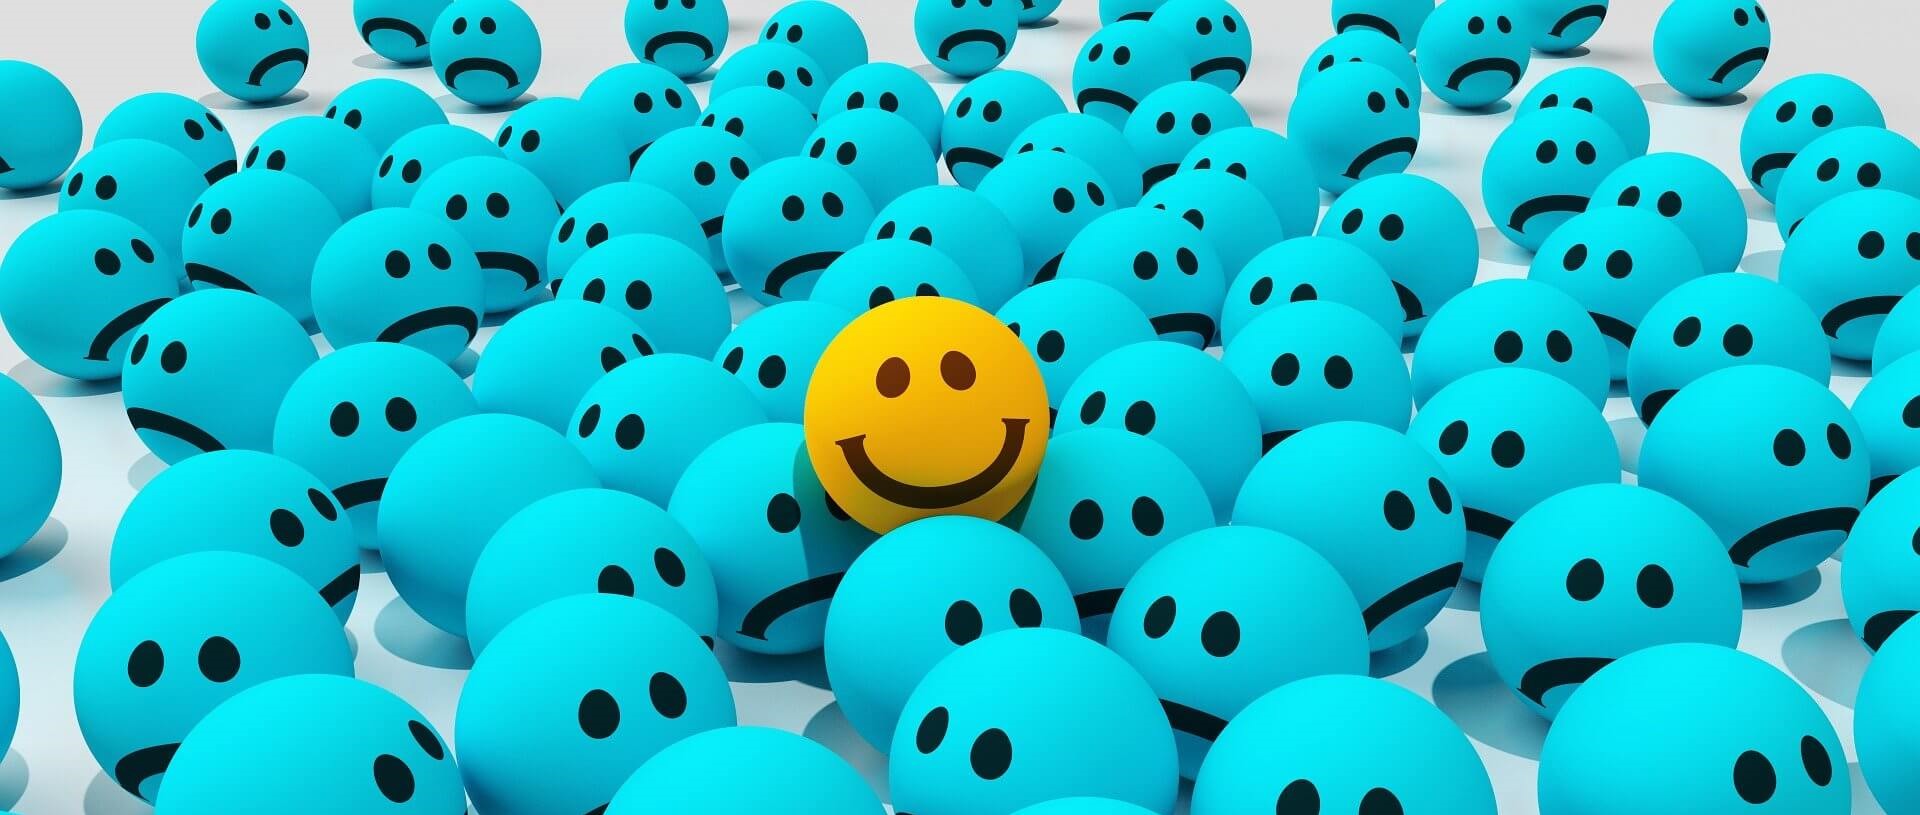 Emojis Likely Increase Conversion Rates